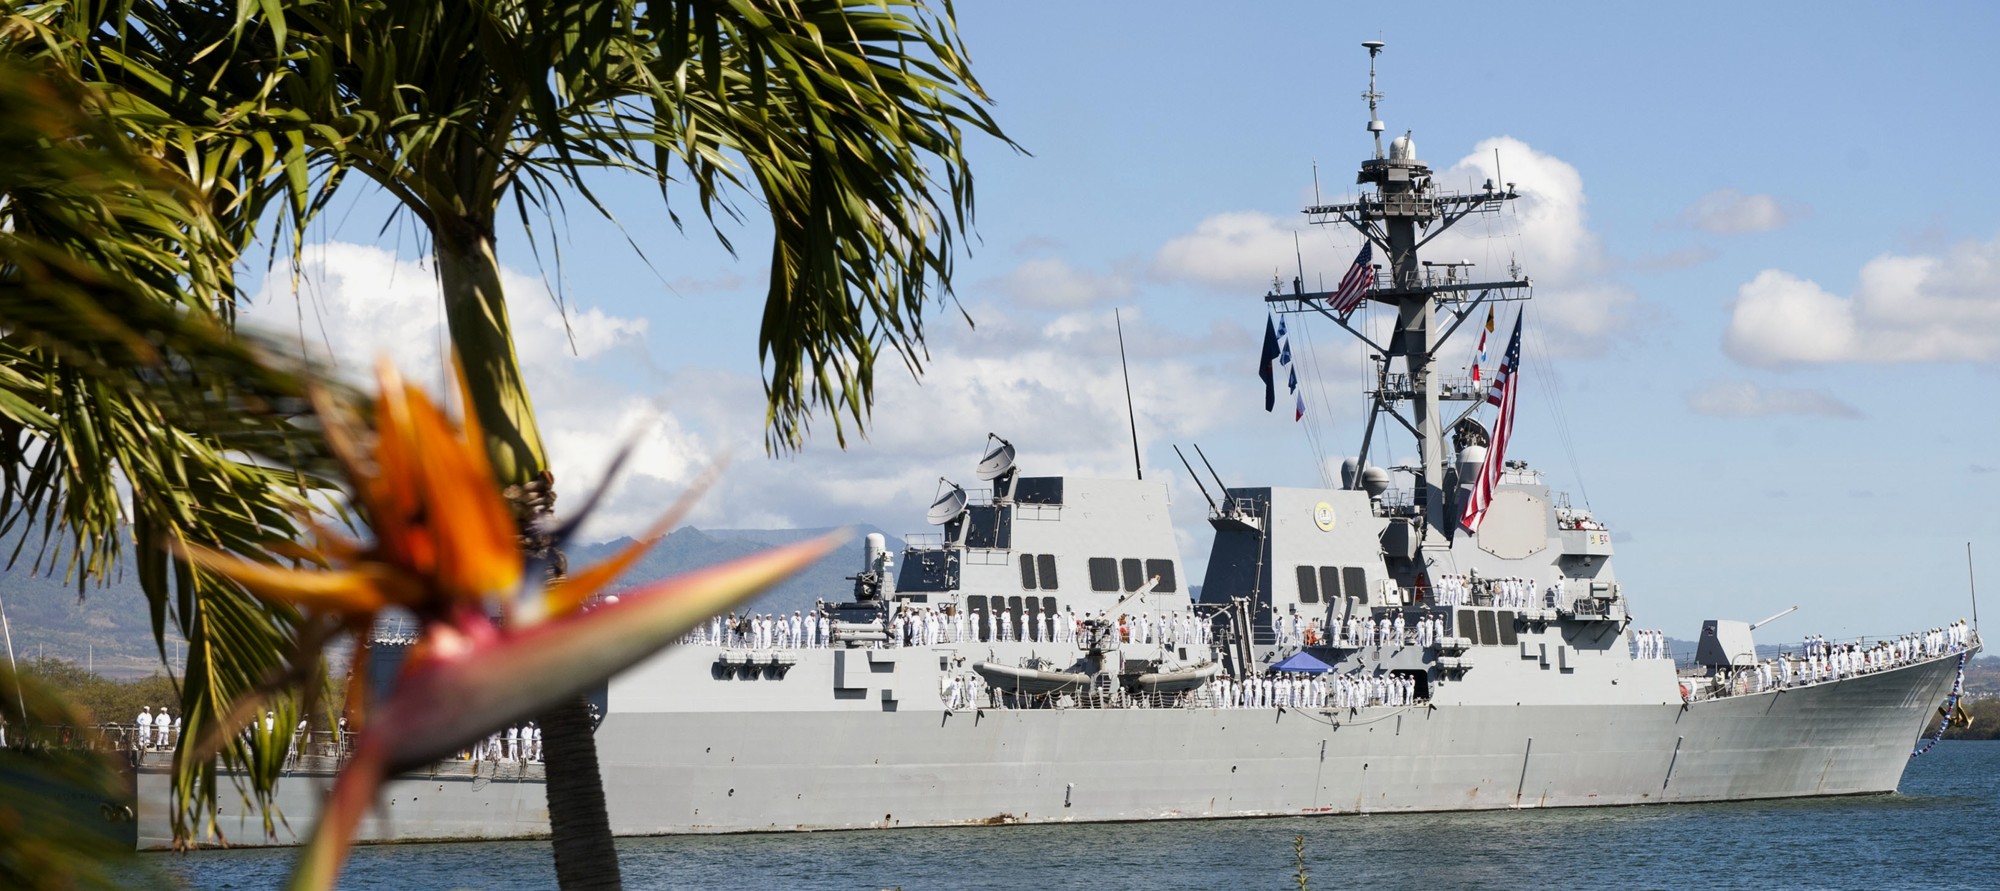 ddg-112 uss michael murphy arleigh burke class guided missile destroyer aegis us navy pearl harbor hawaii 27